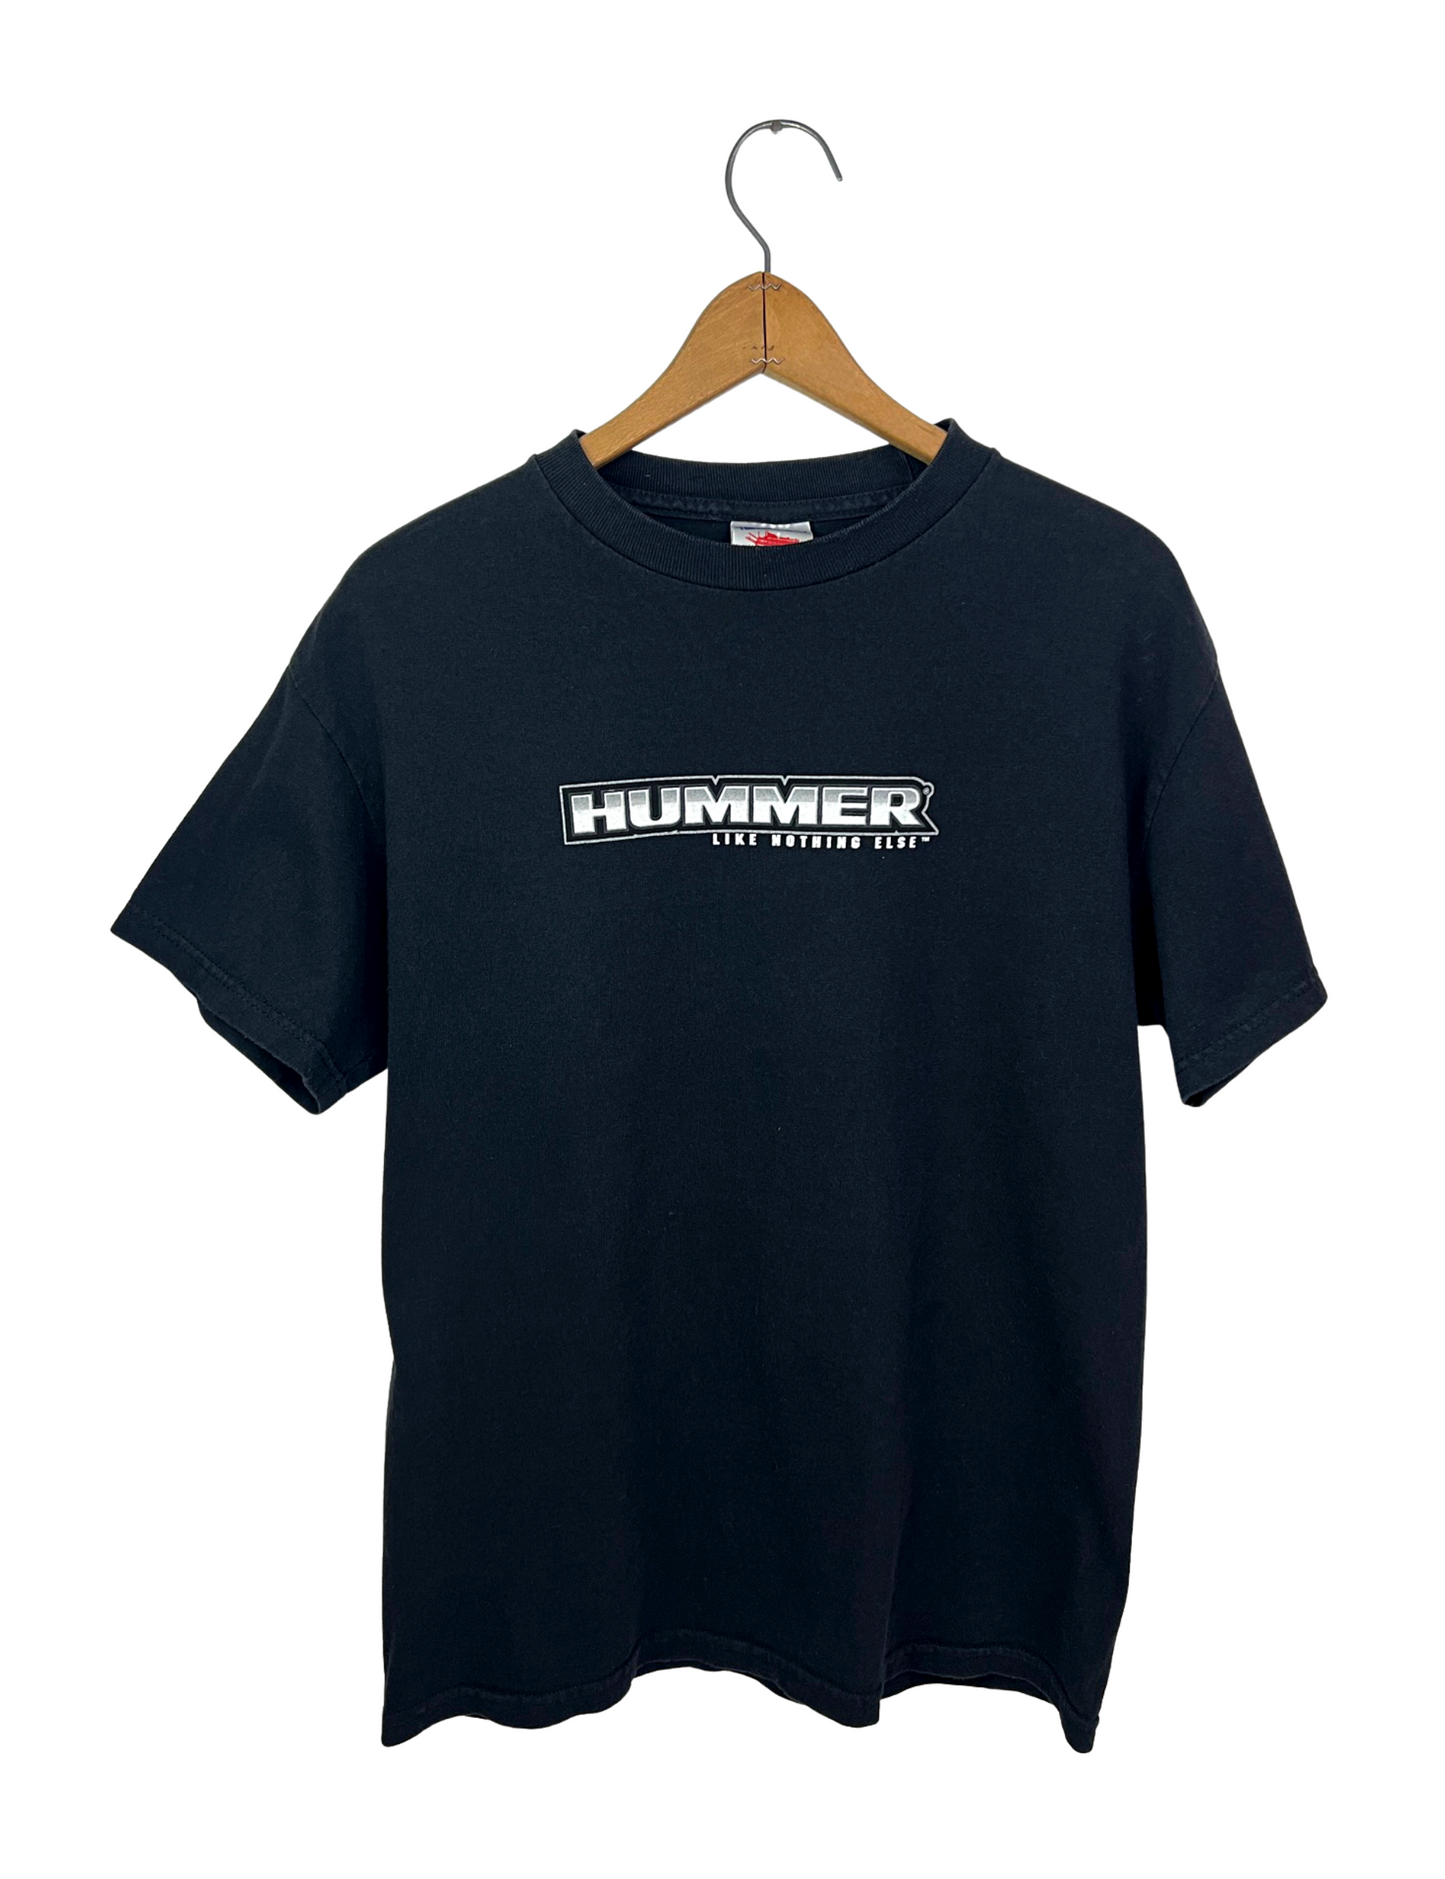 2003 Hummer H2 “Like No Other” T-shirt Size Medium